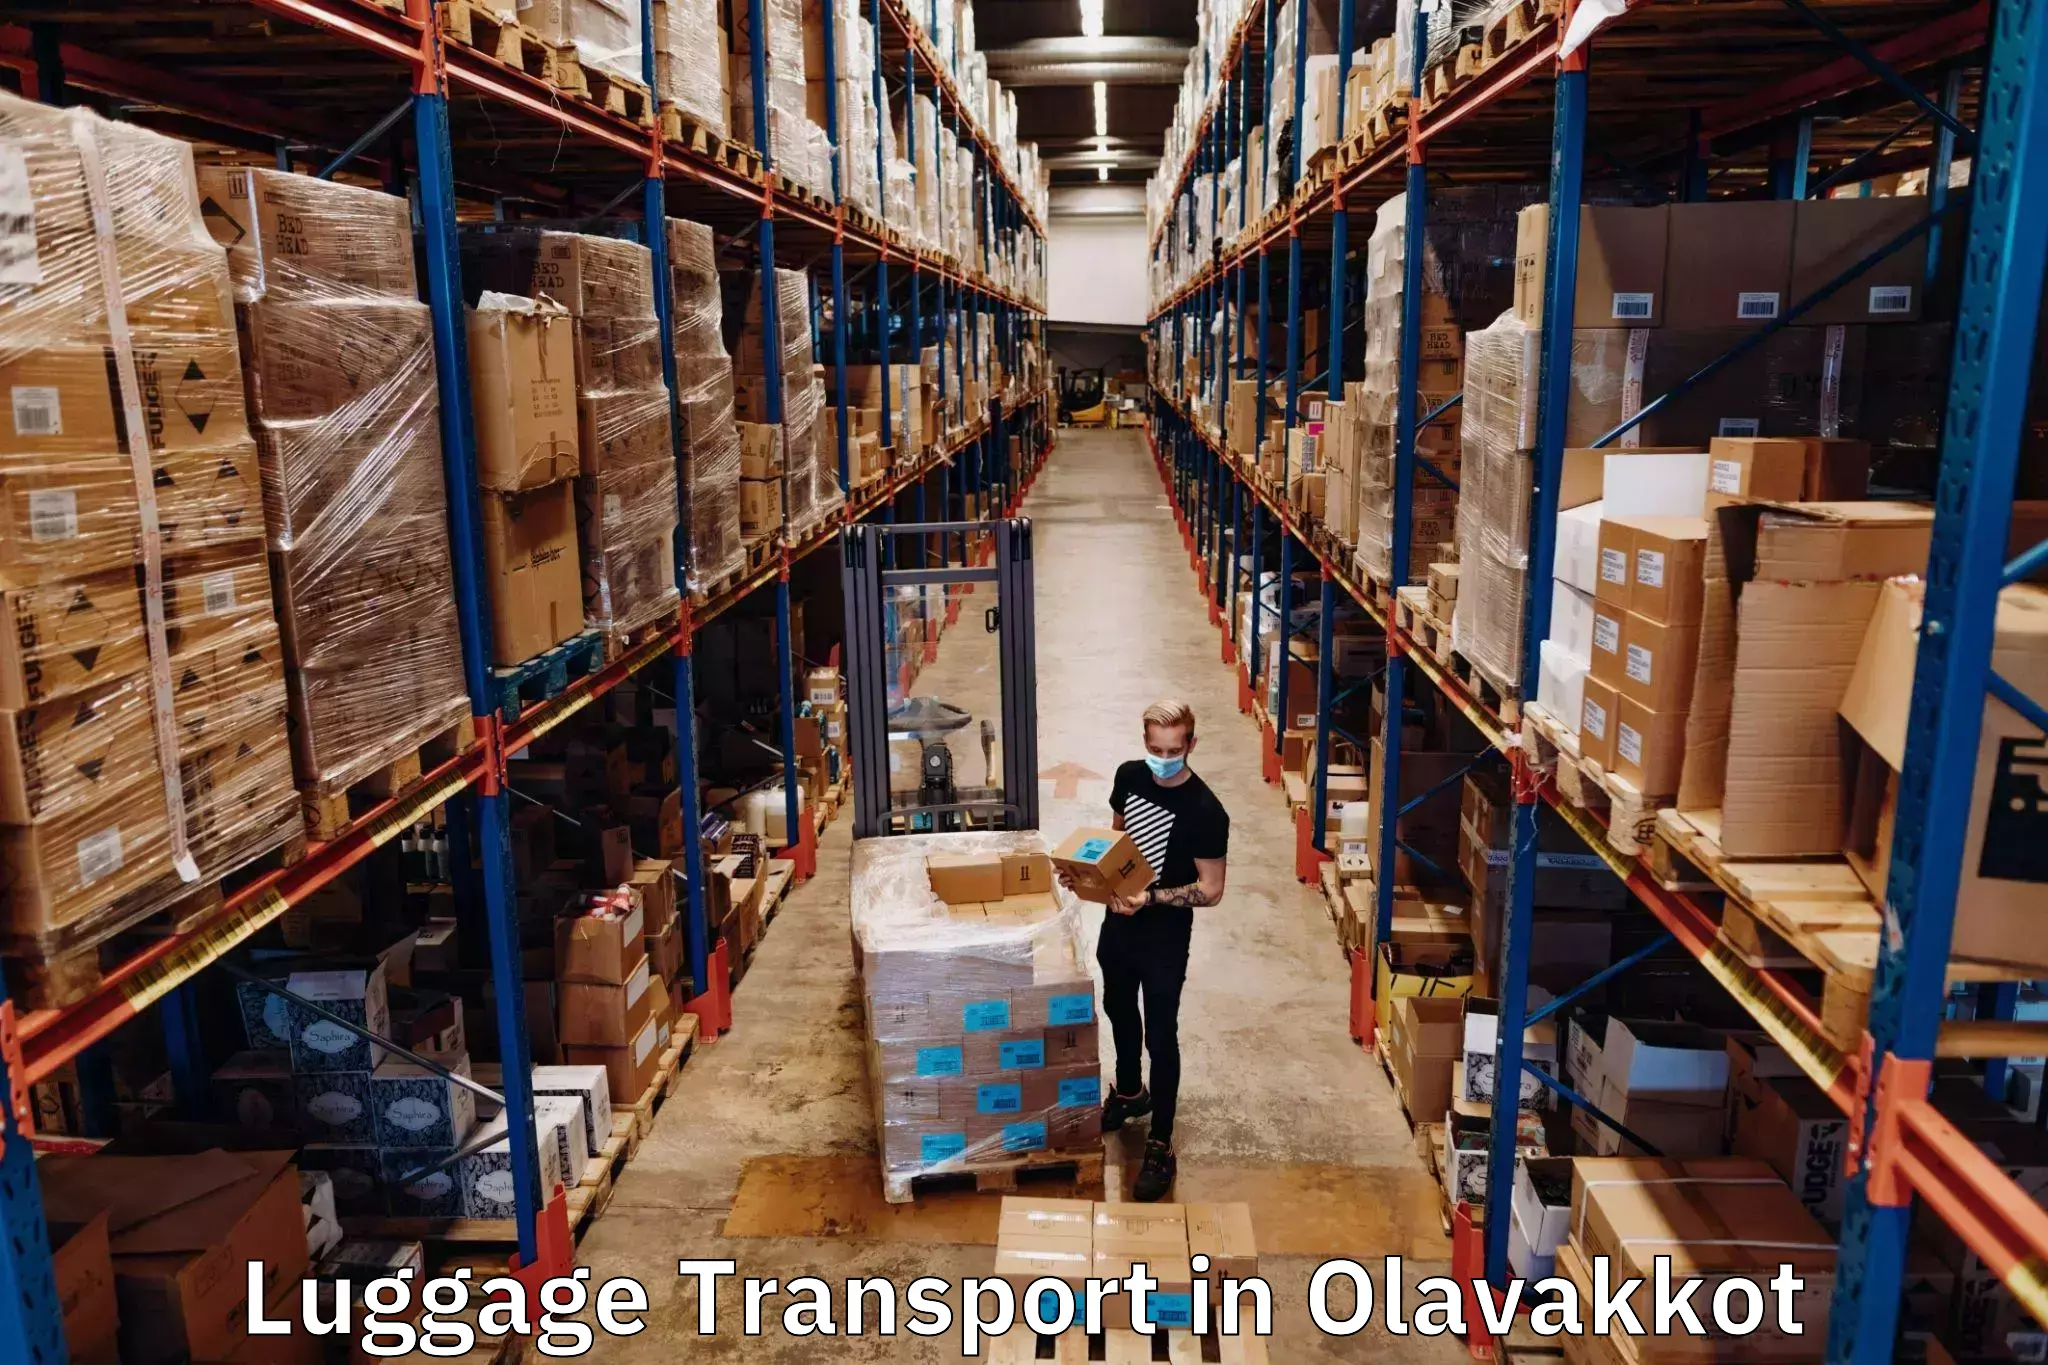 Baggage transport network in Olavakkot